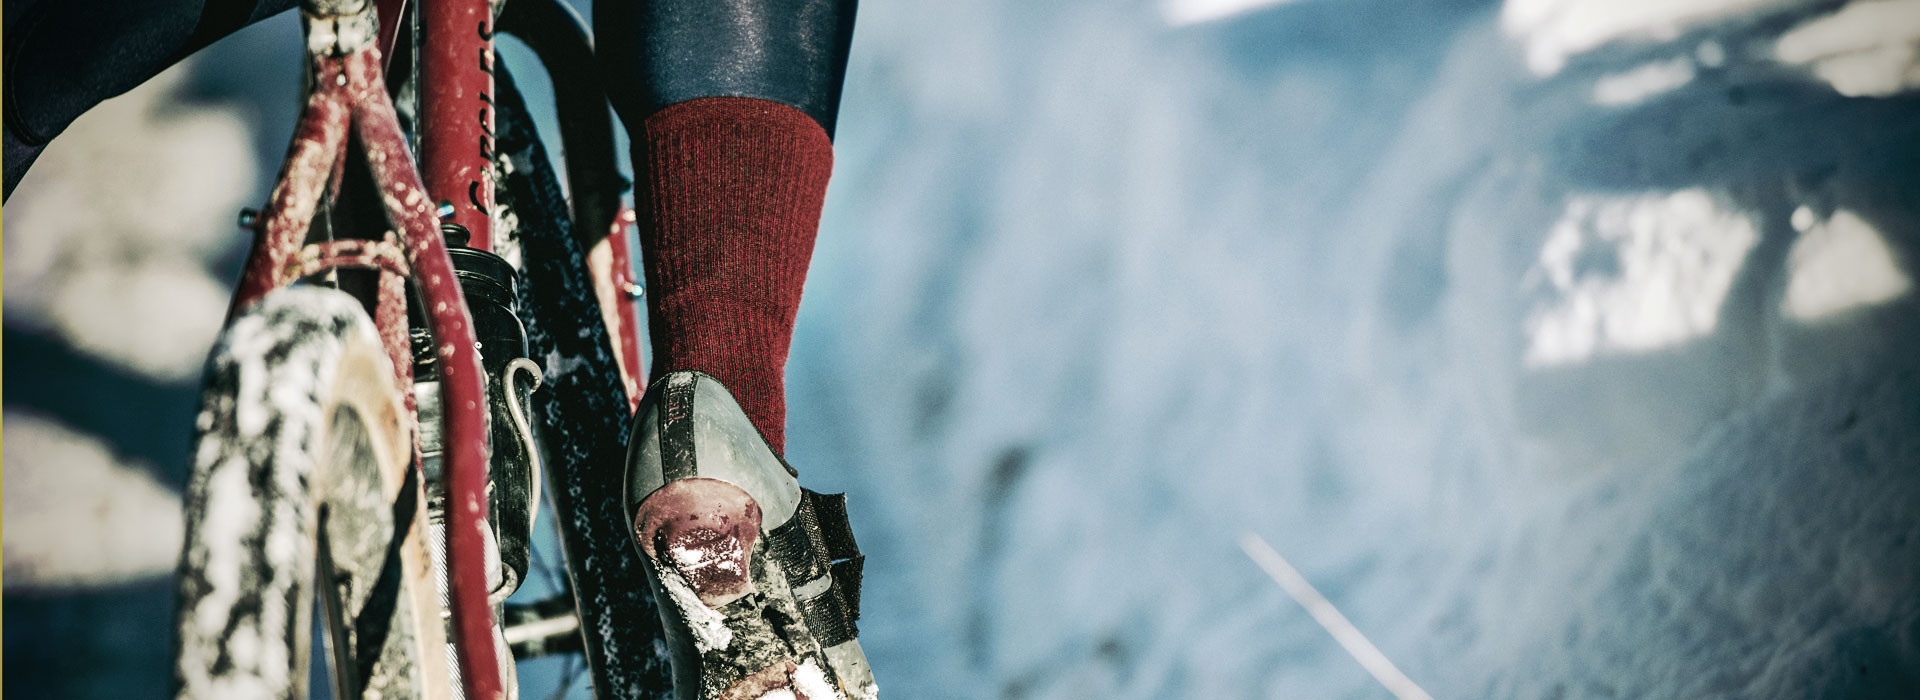 Demarchi - Calze ciclismo invernali